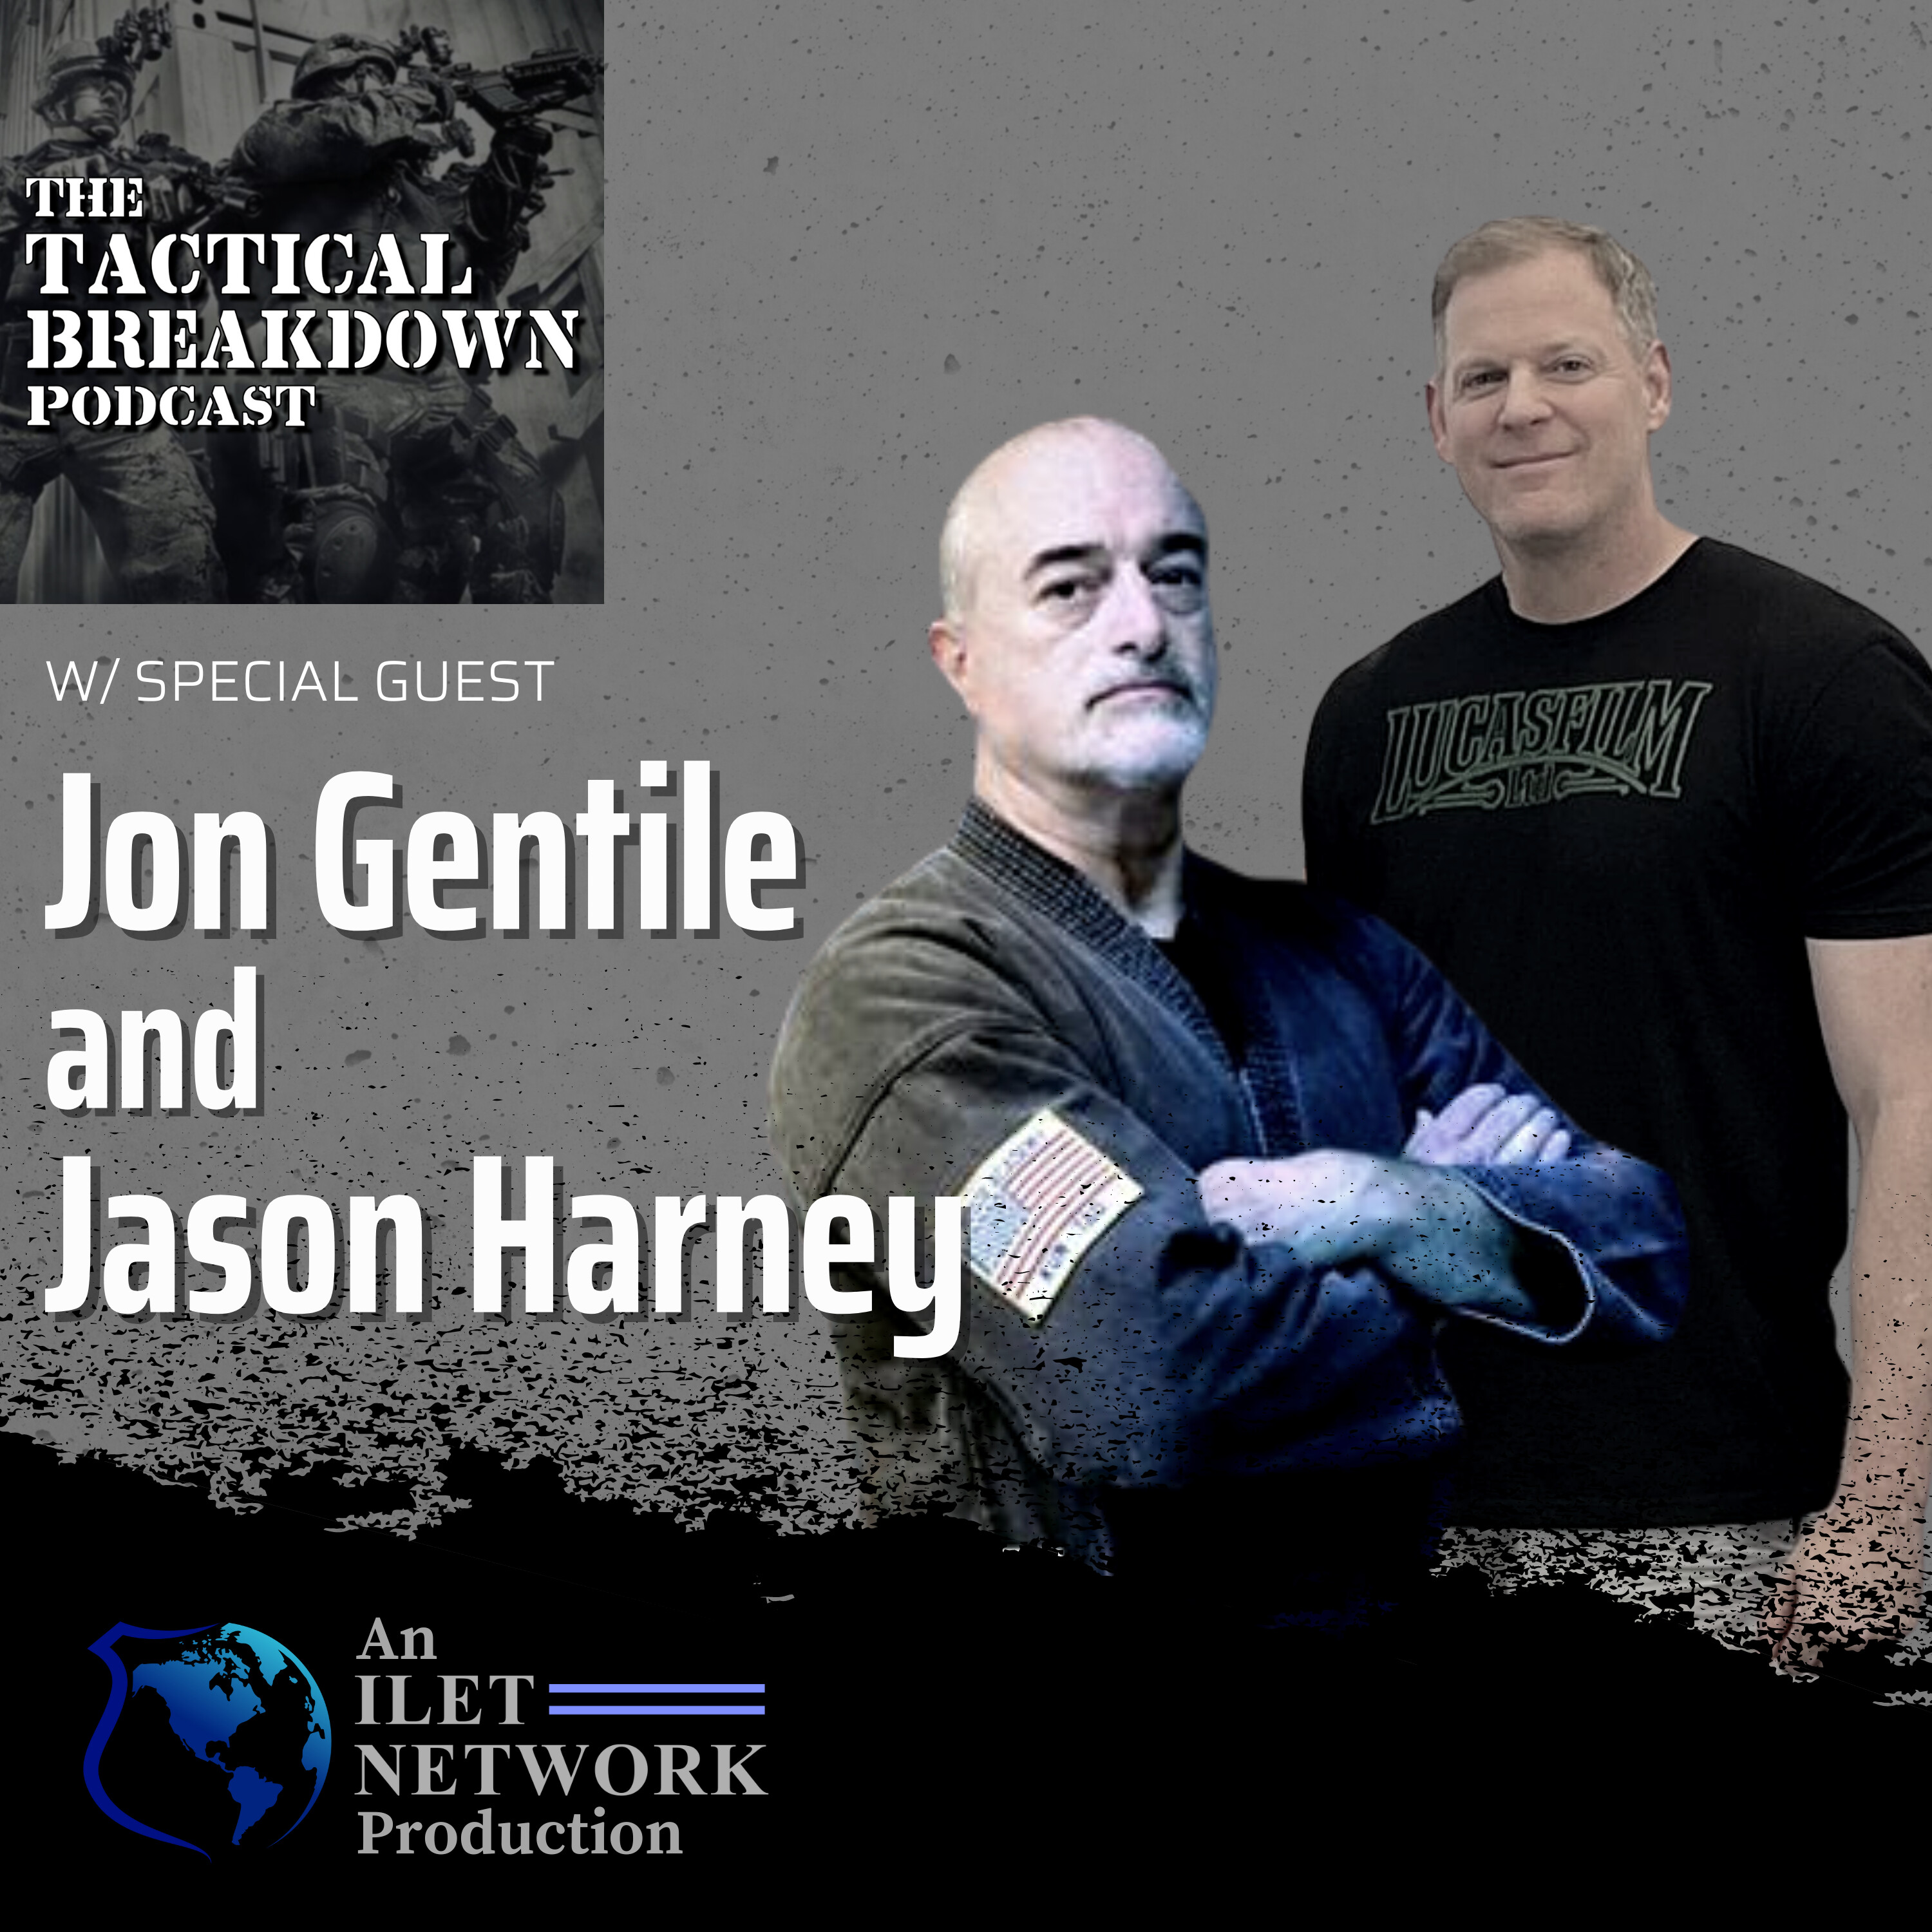 Jason Harney & Jon Gentile: Wrist Lock - Martial Arts and Police Use of Force Image